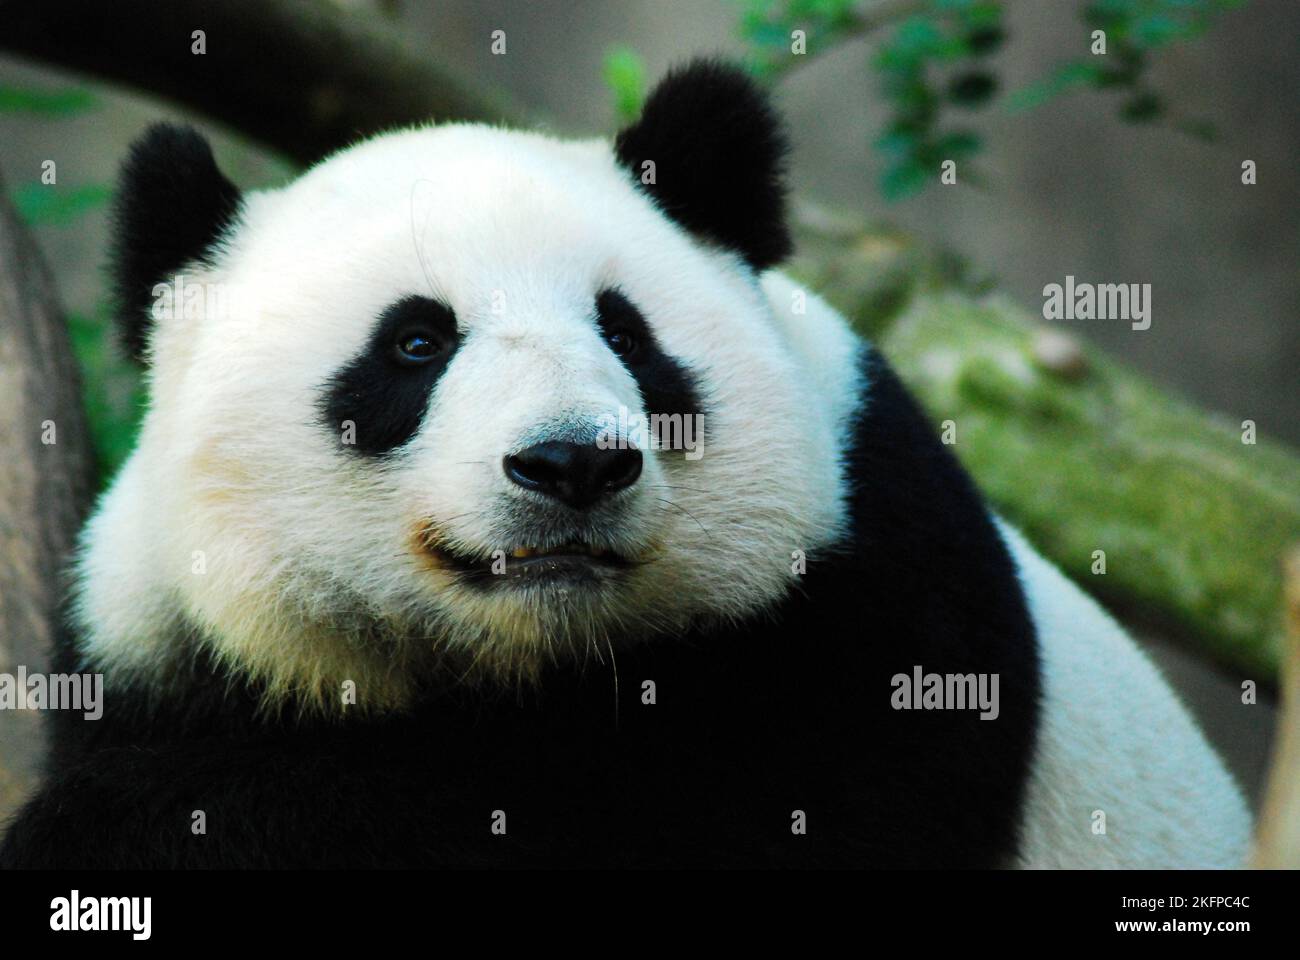 A Giant Panda, Ailuropoda melanoleuca, raises its head while resting to inspect its surroundings Stock Photo